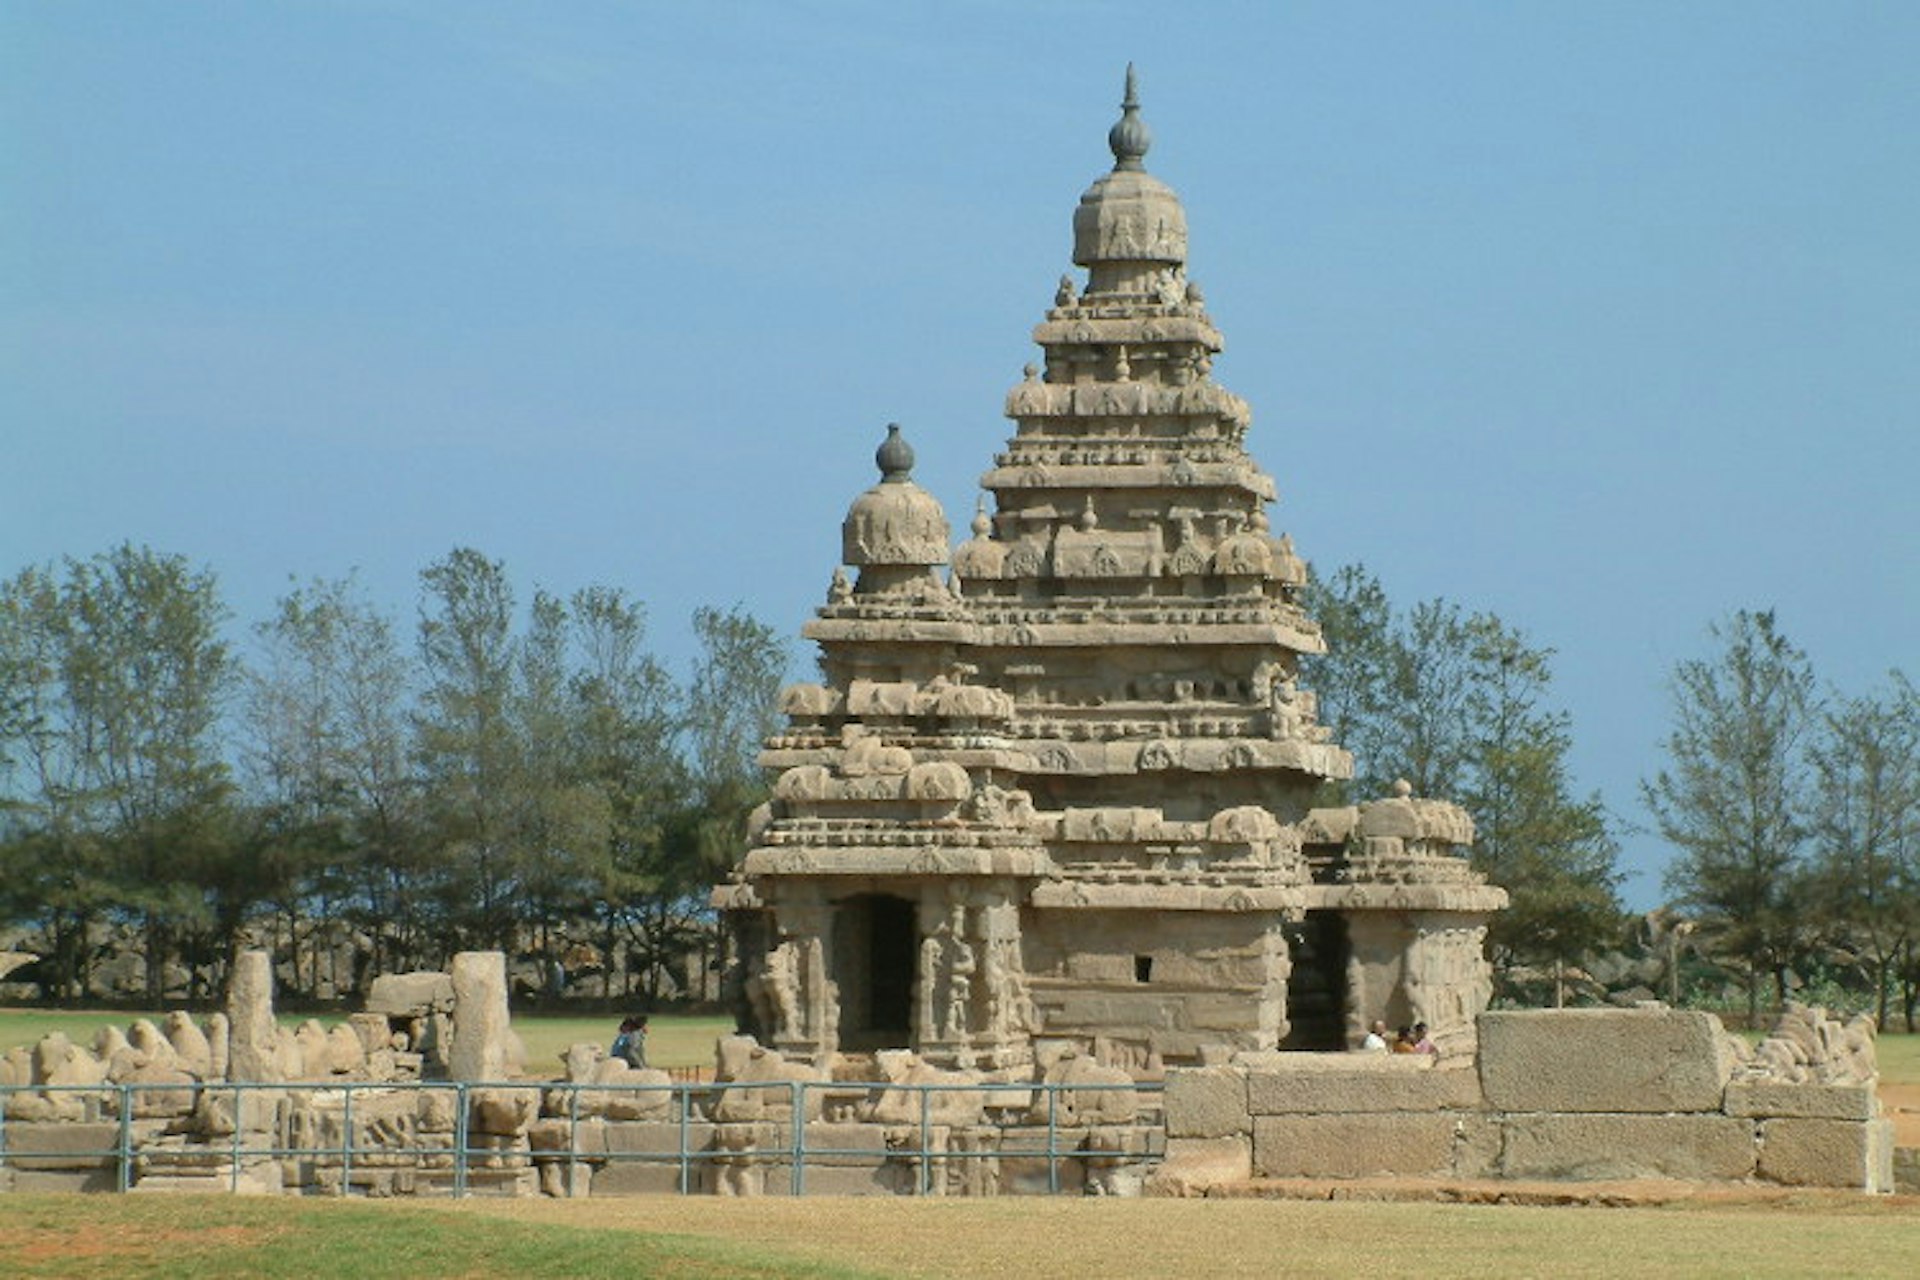 The Shore Temple, Mamallapuram. Image by Geetesh Bajaj / Getty Images.